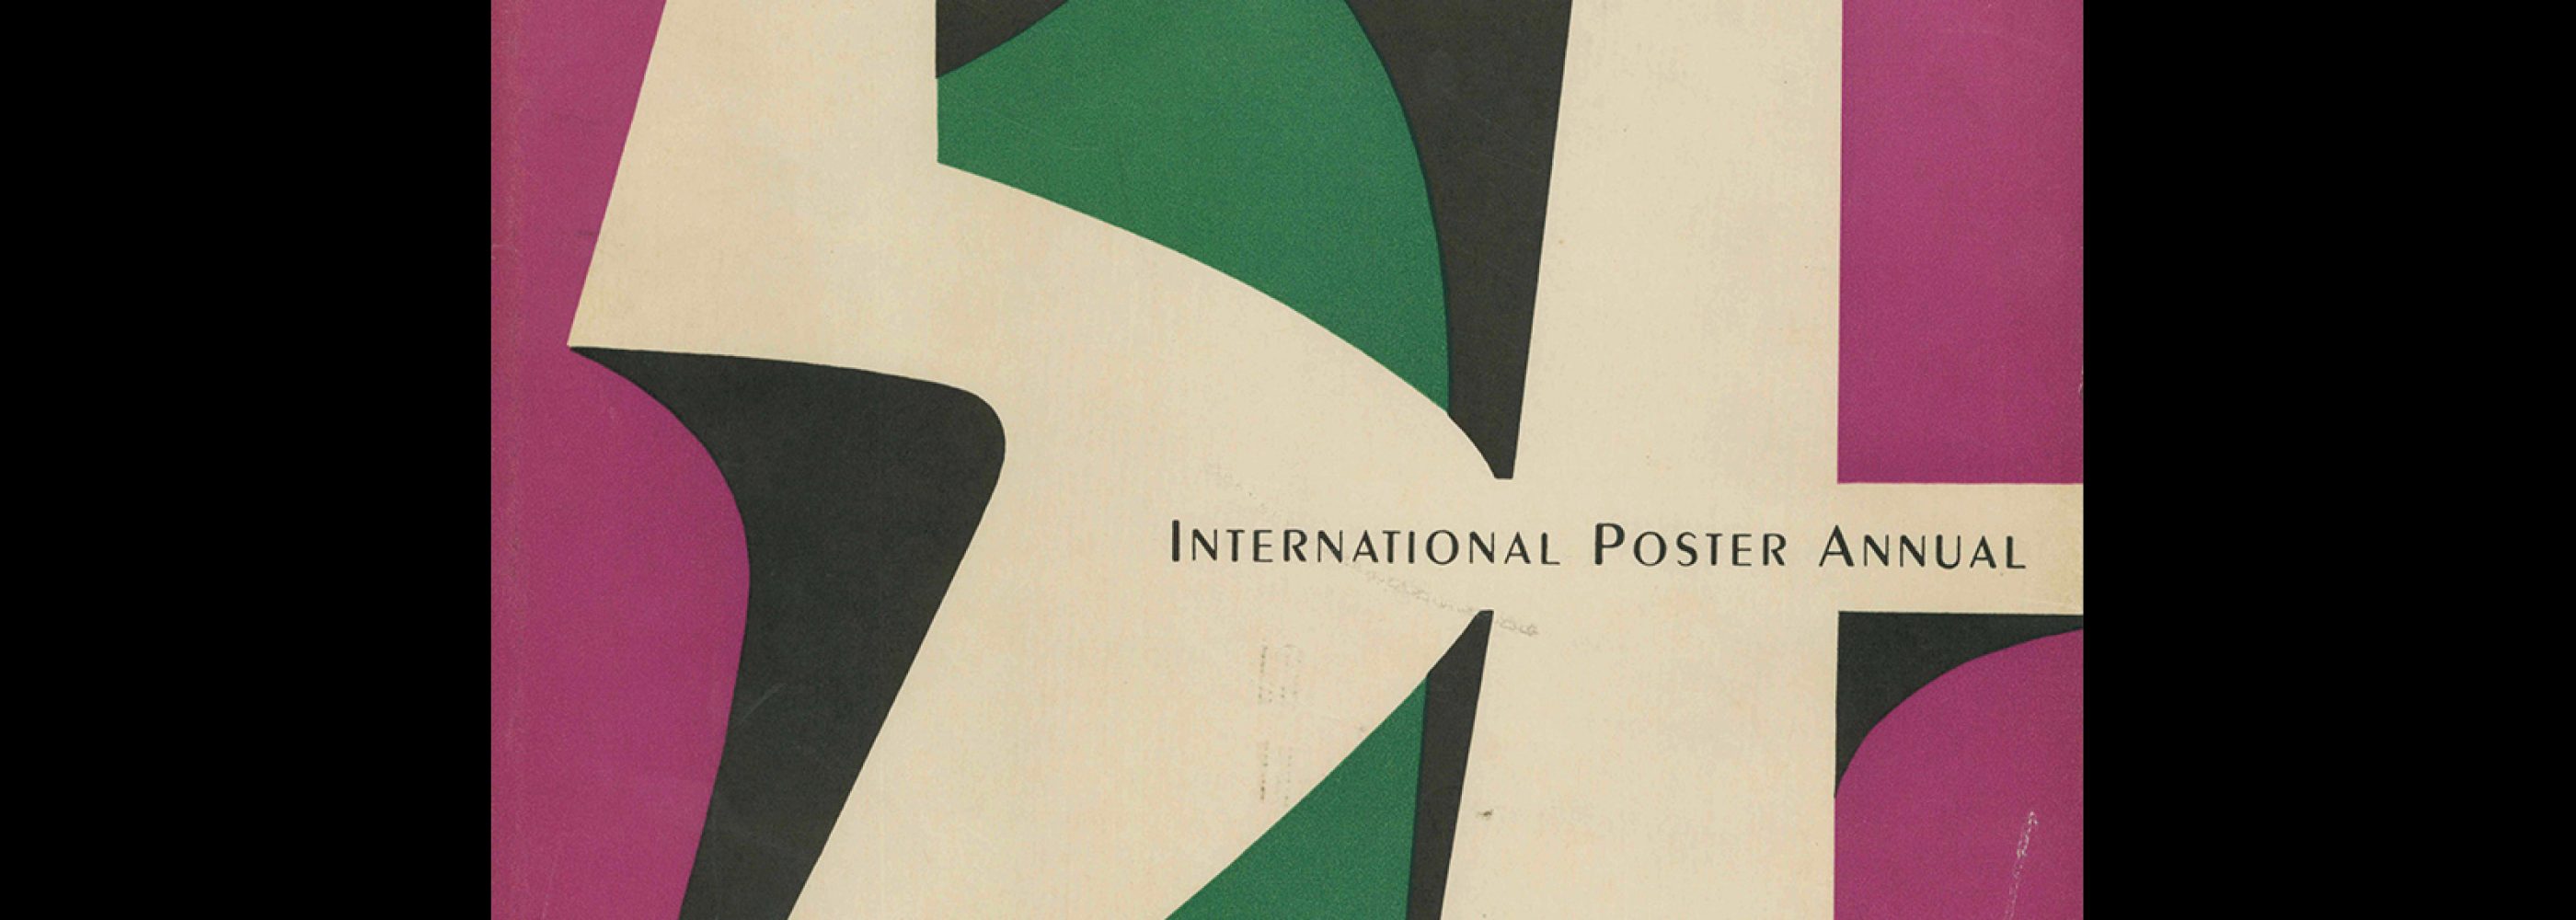 International Poster Annual - 1951. Designed by Walter Allner